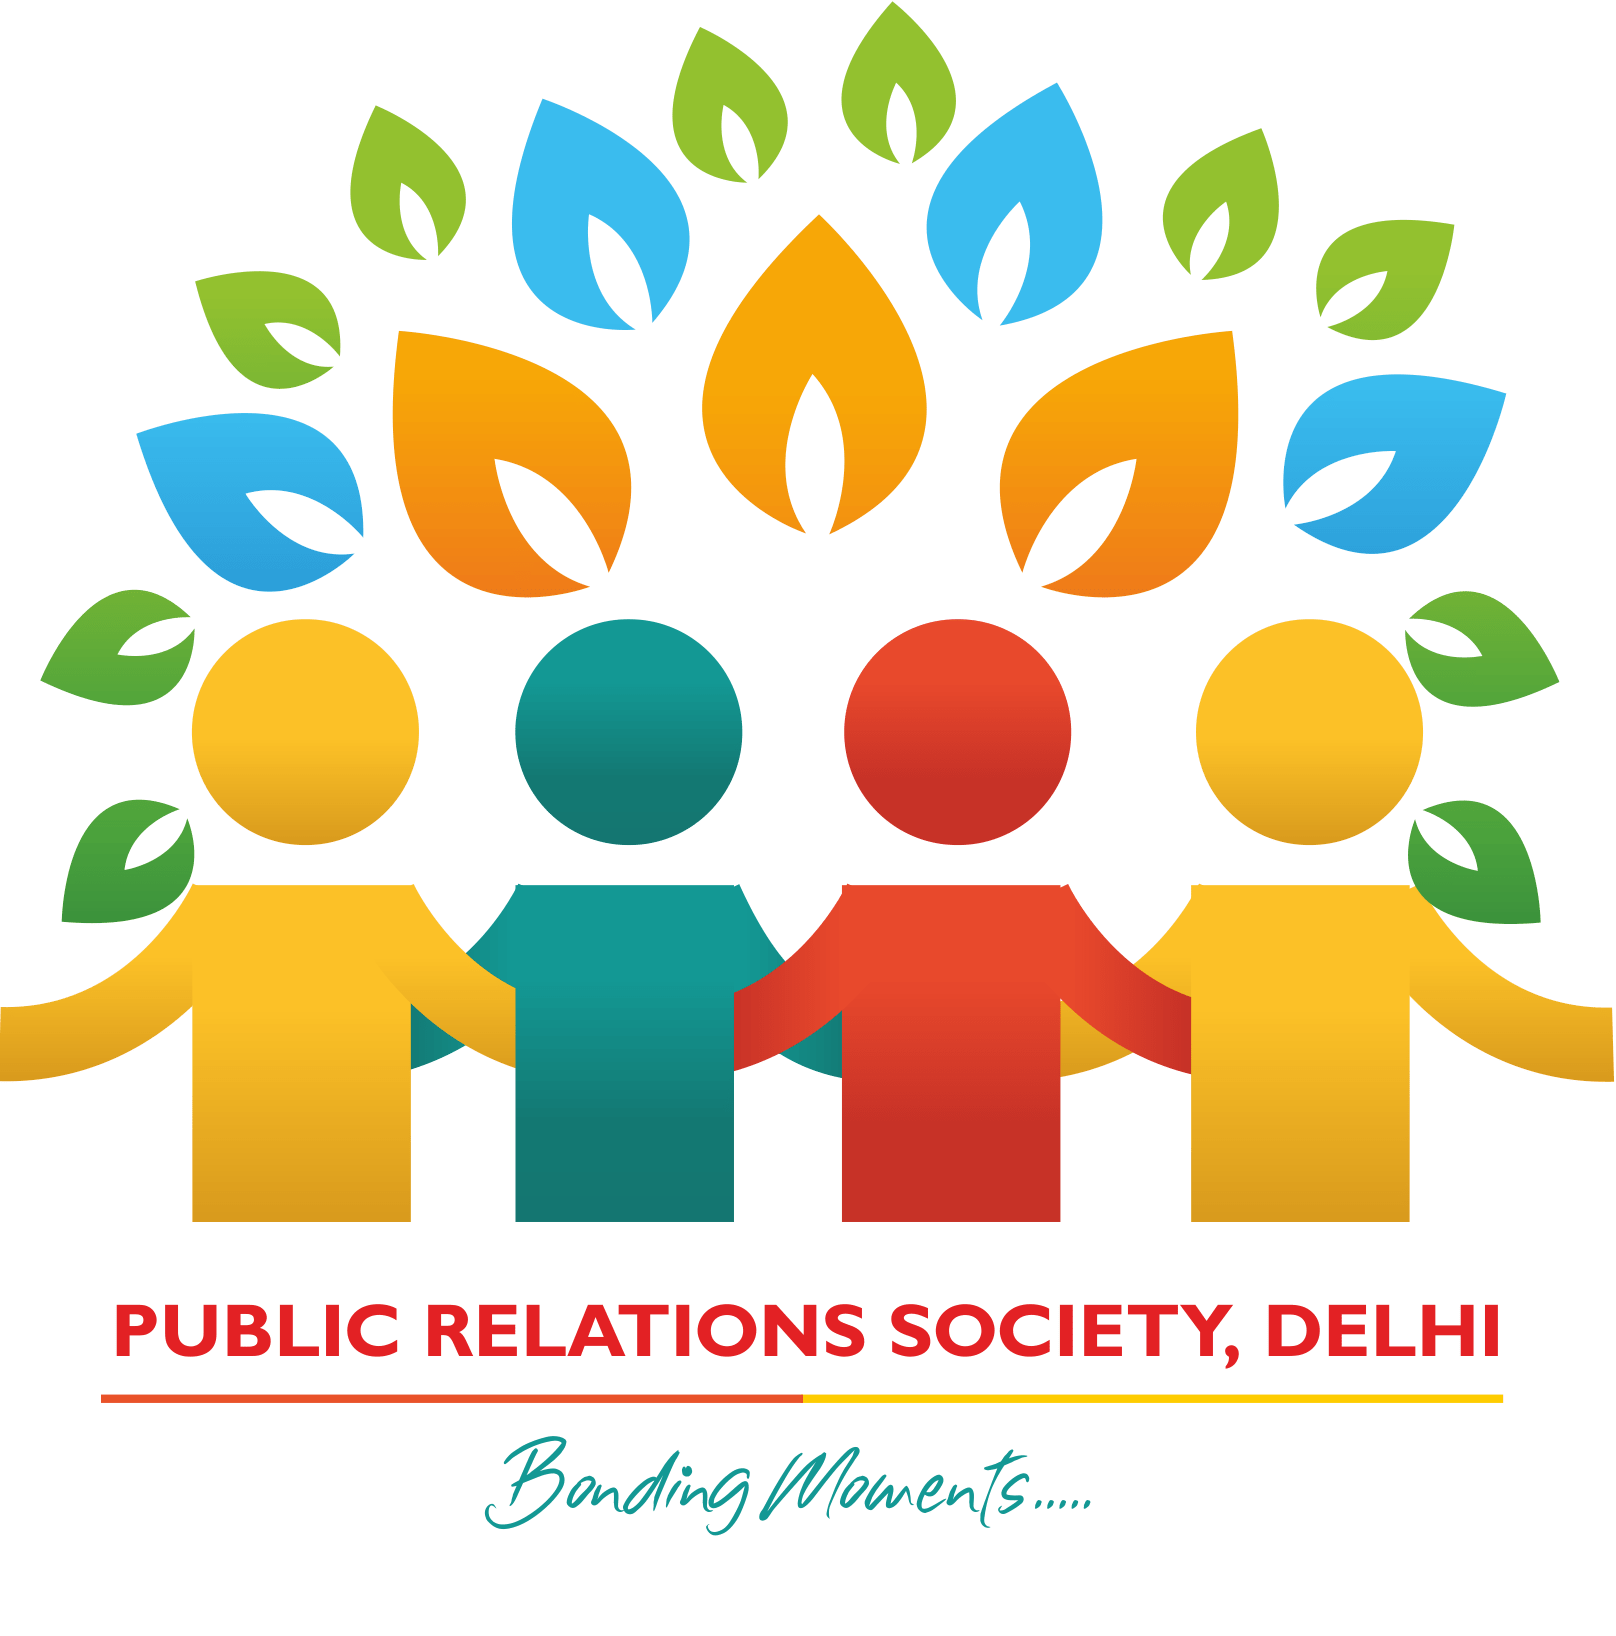 Public Relations Society